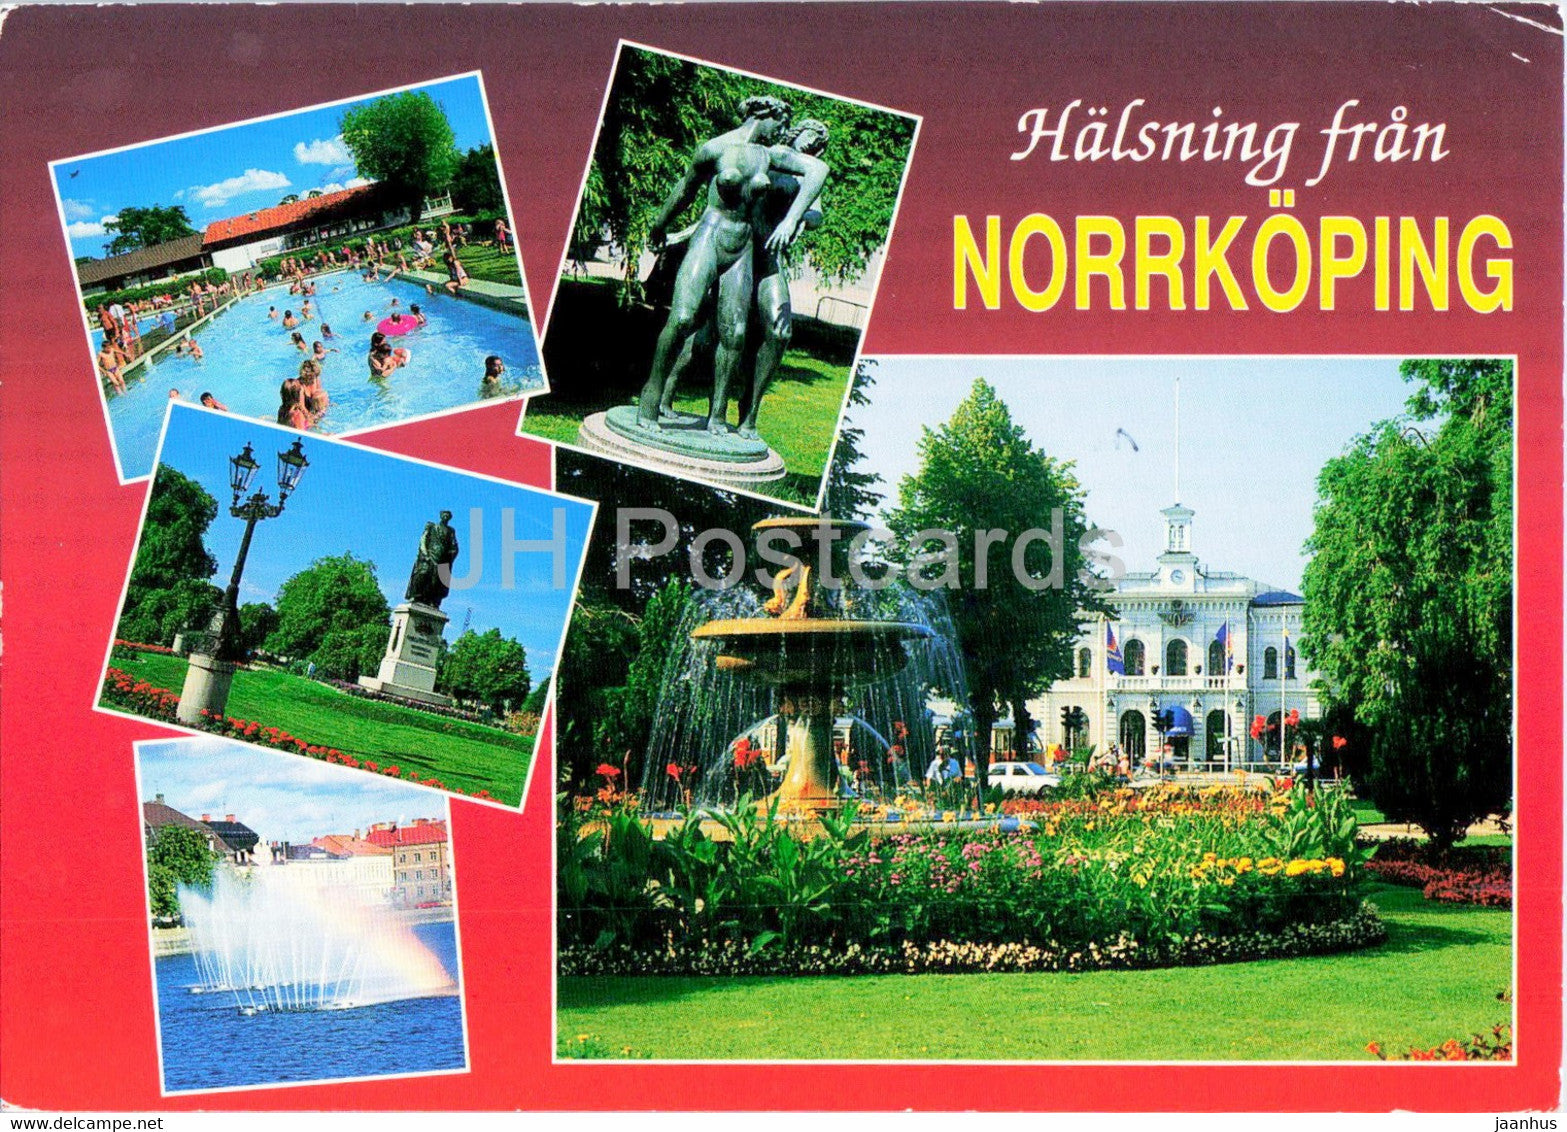 Halsning fran Norrkoping - town views - multiview - Sweden - unused - JH Postcards